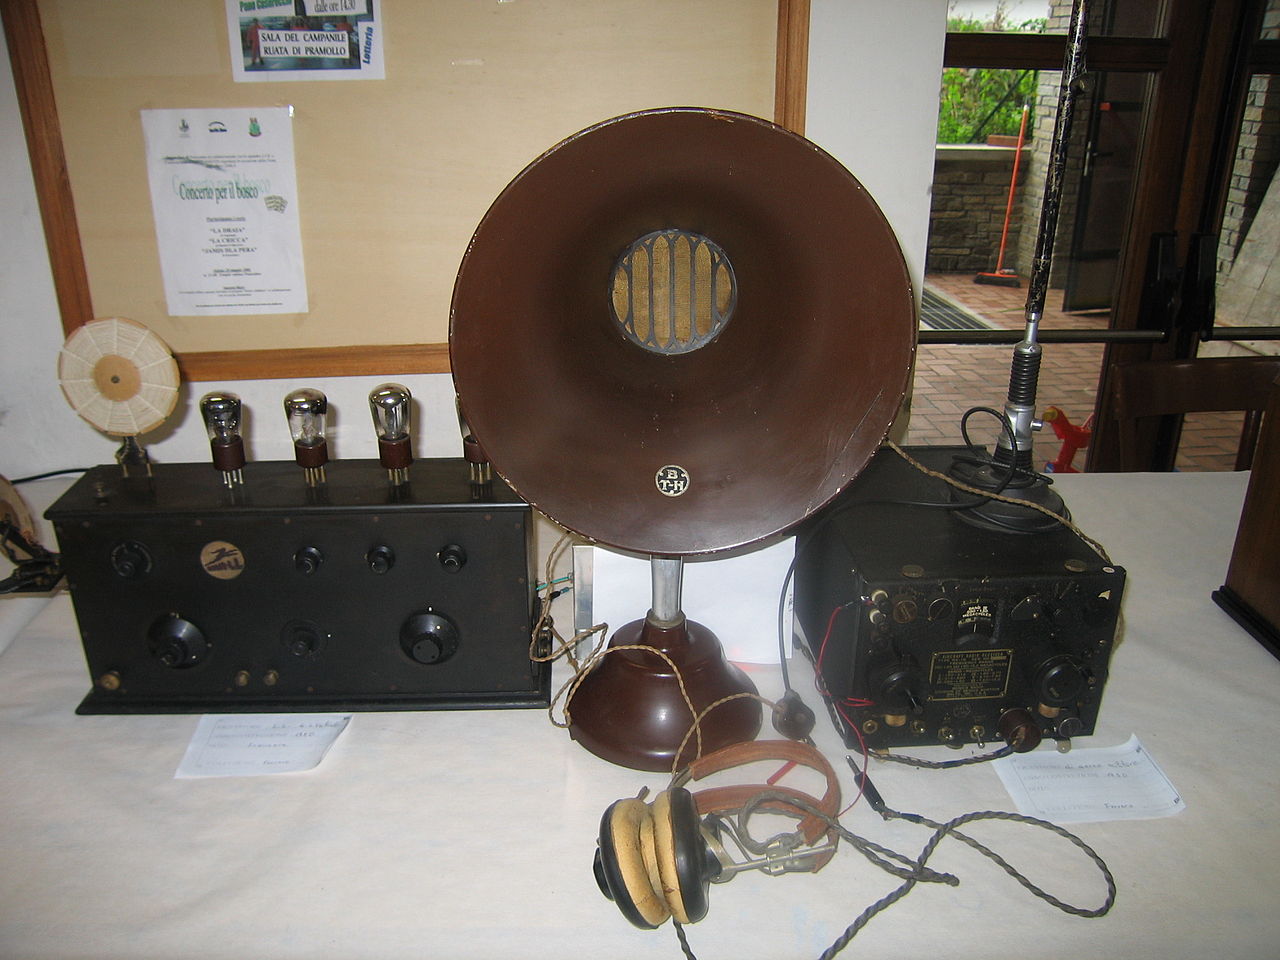 File:Antique radios 19.JPG - Wikipedia